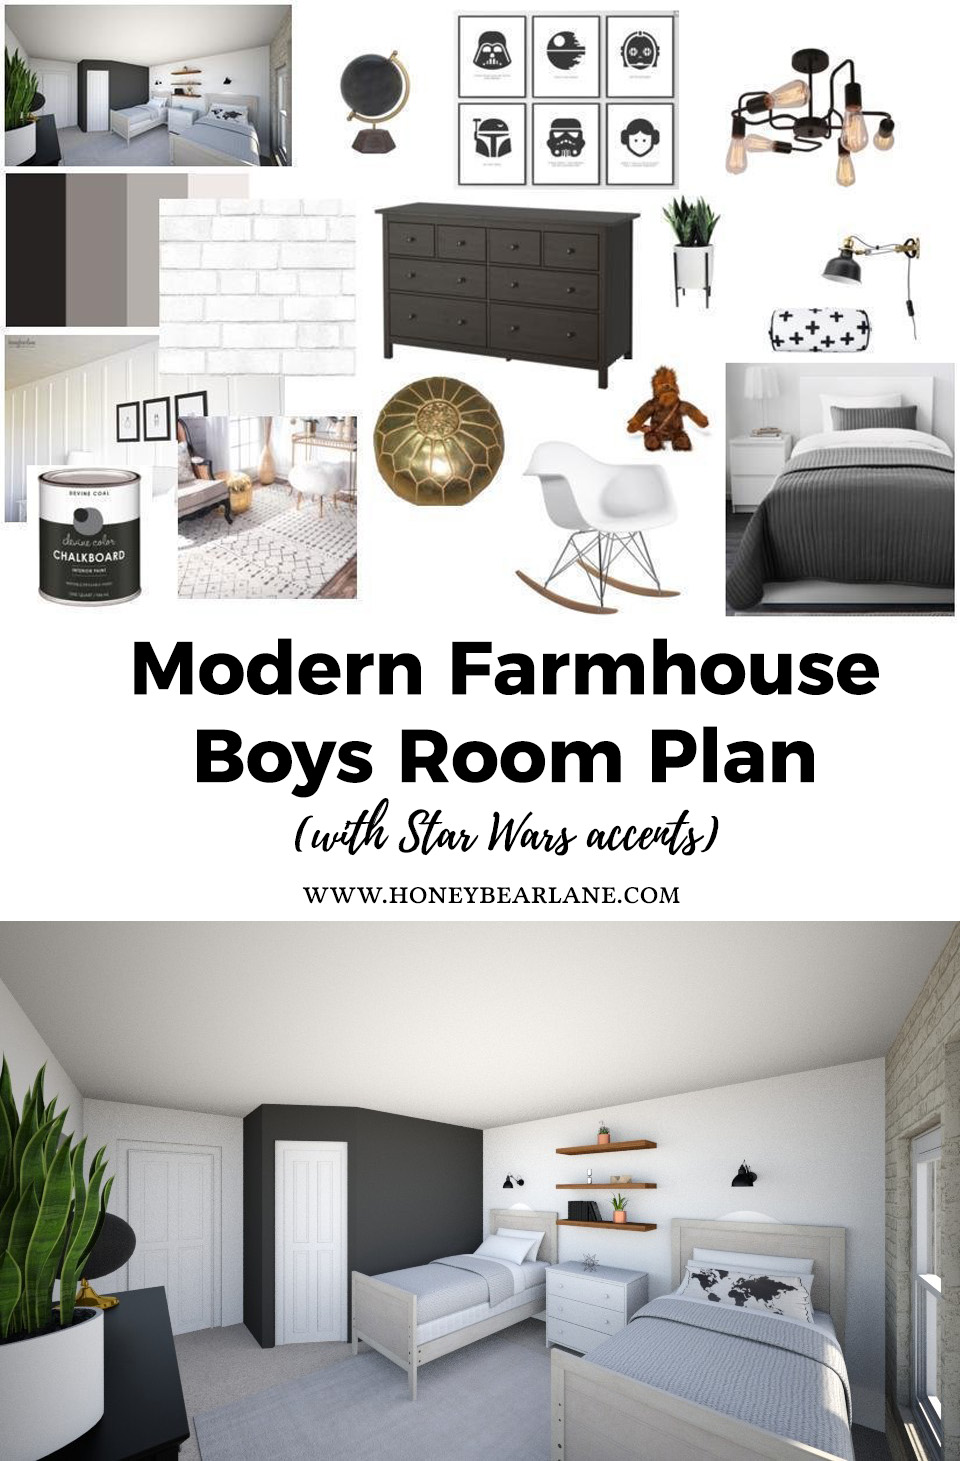  Modern  Farmhouse  Boys Room  Plans  Honeybear Lane